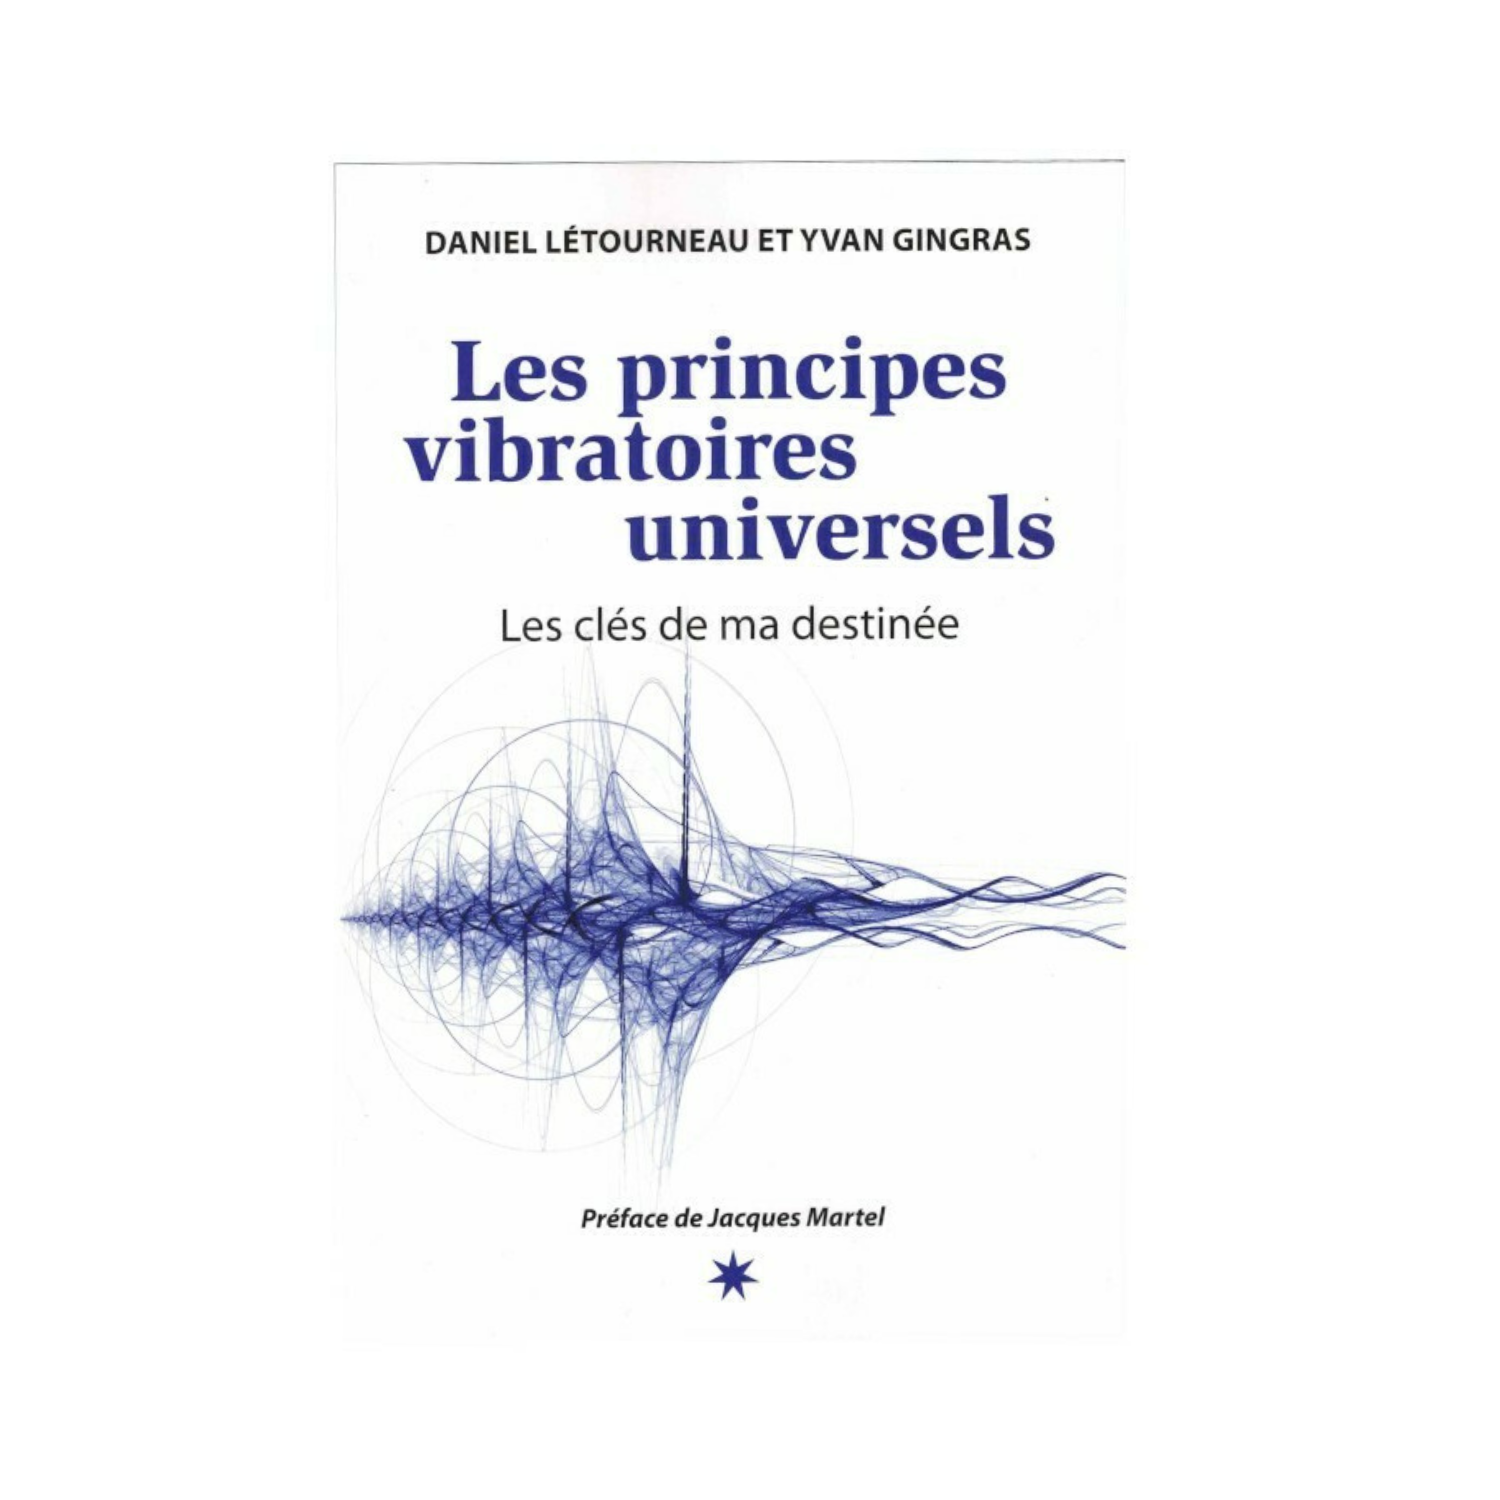 Les principes vibratoires universels